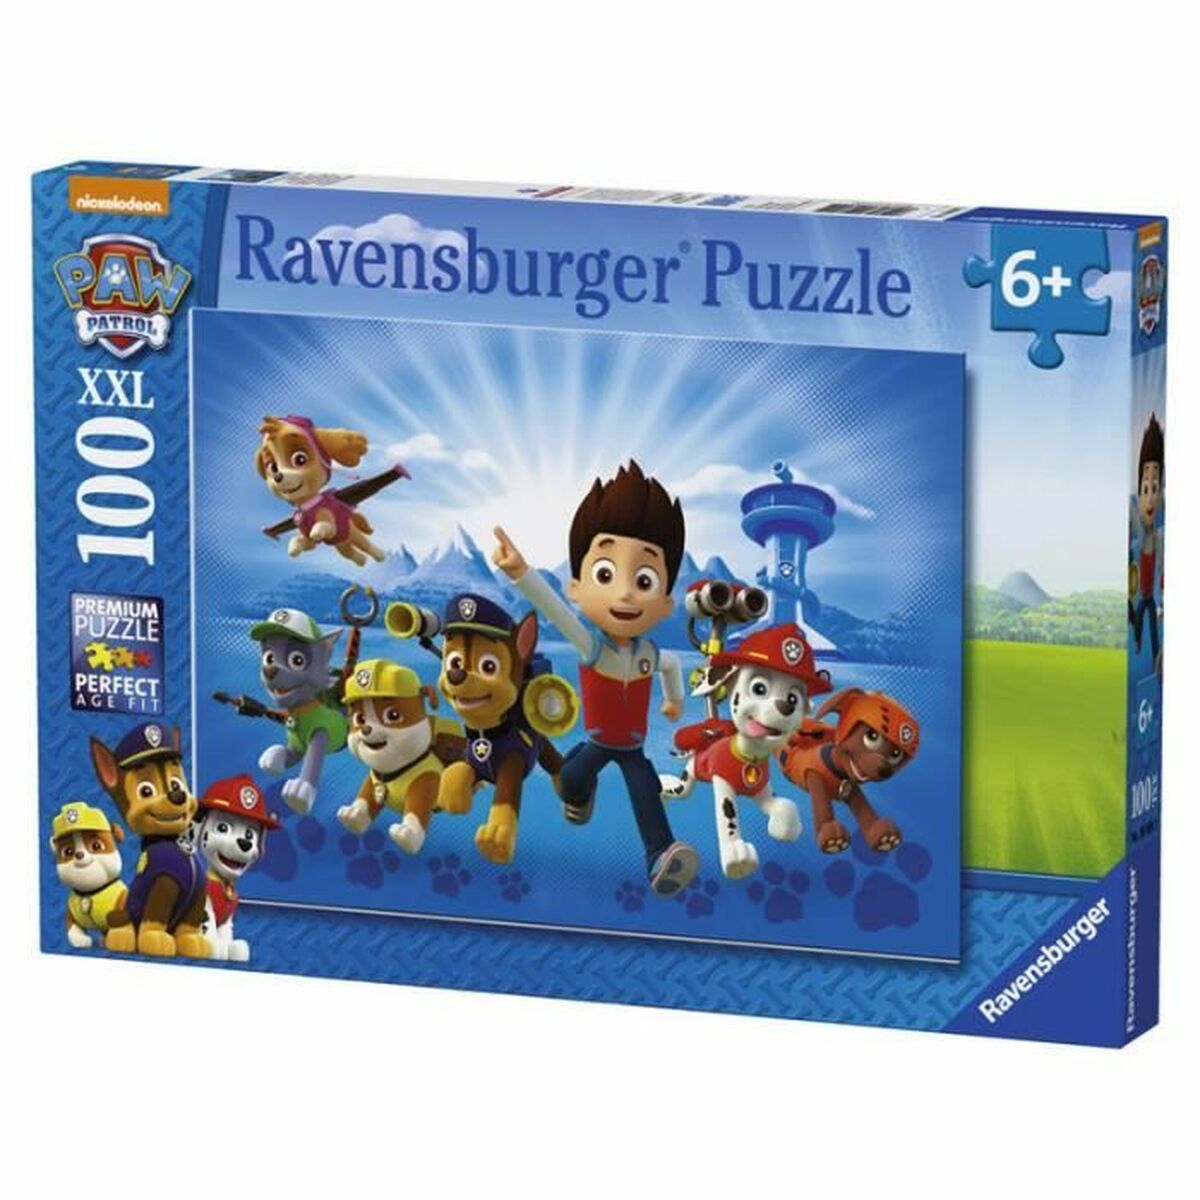 Puzzle The Paw Patrol Ravensburger 10899 XXL 100 Pezzi